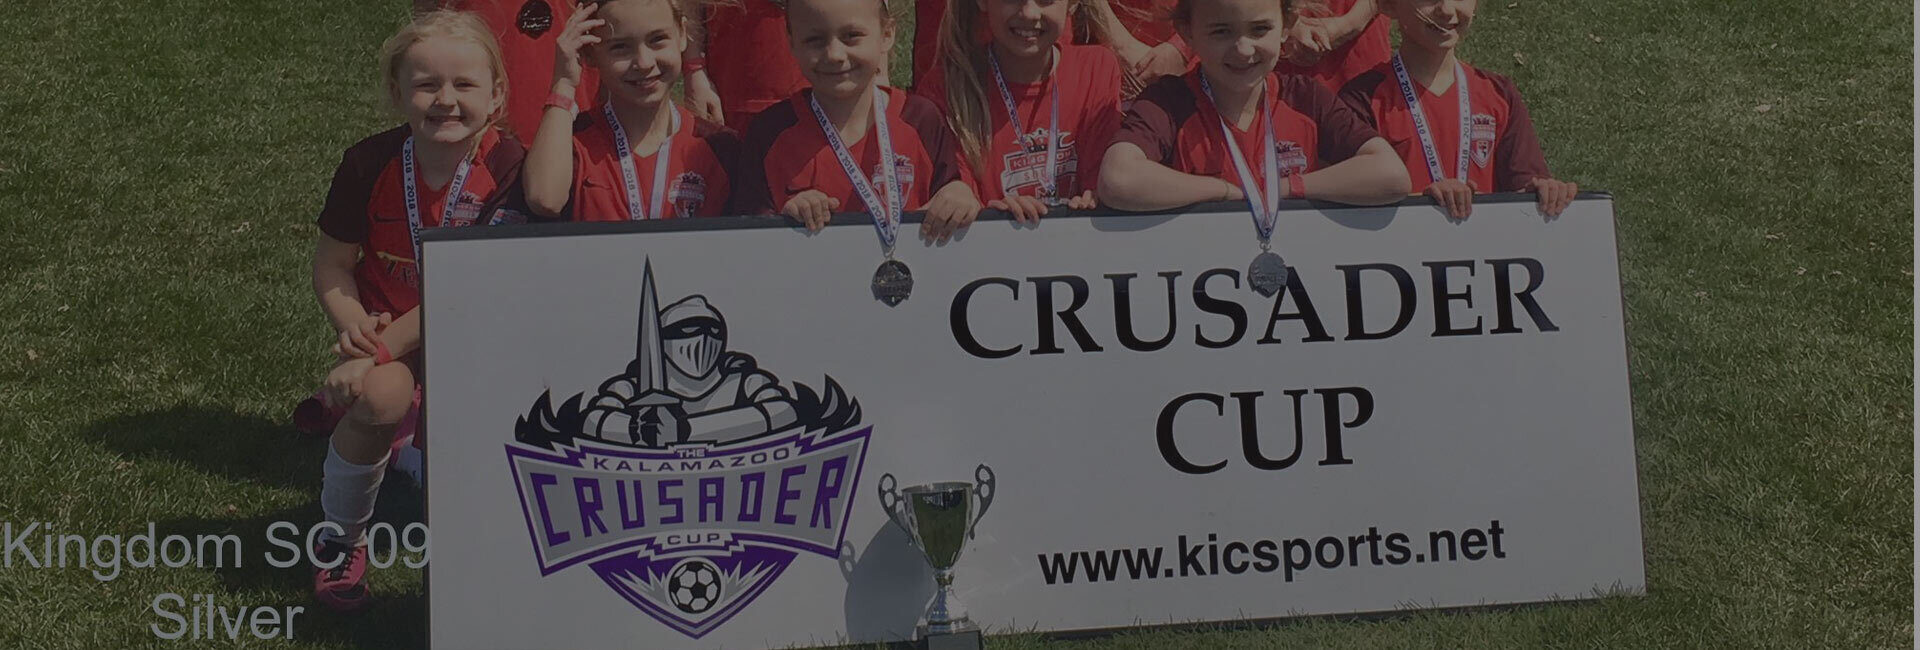 Crusader Cup